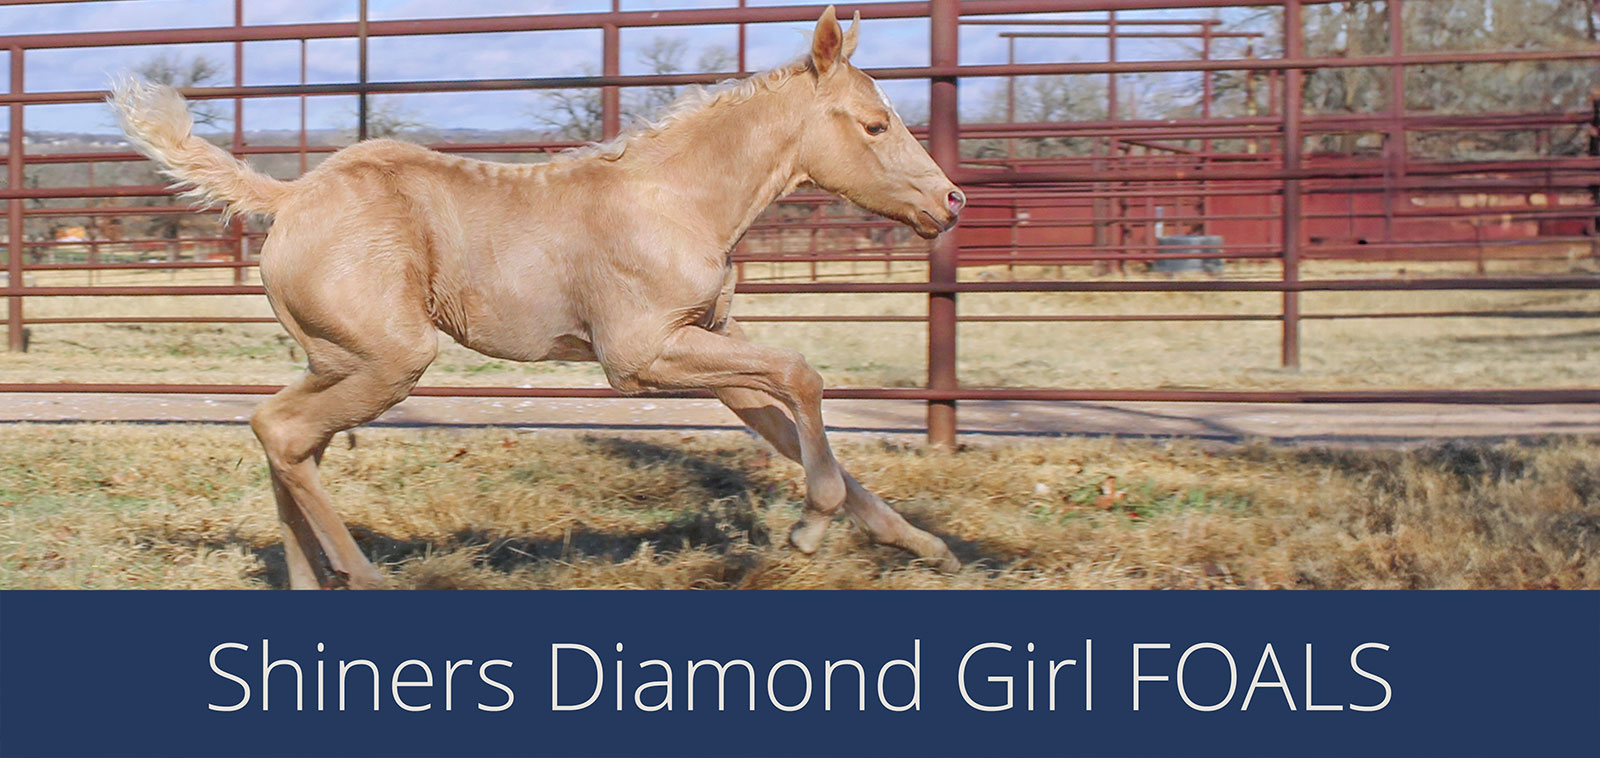 Shiners Diamond Girl Foals image